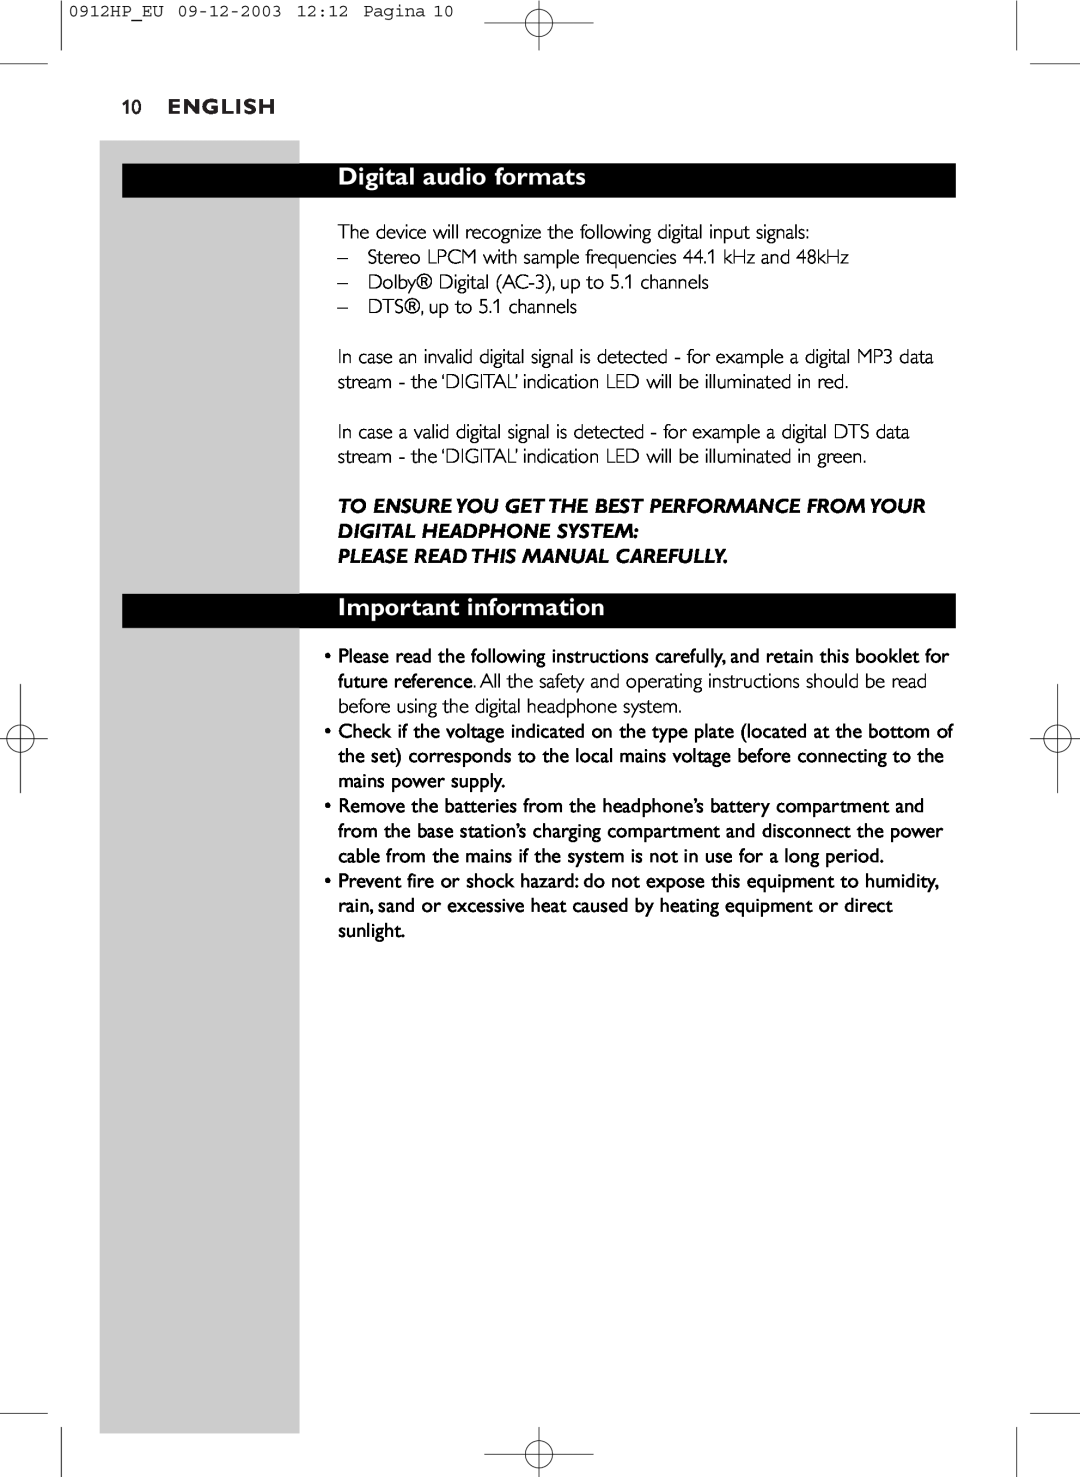 Philips HP1500 manual Digital audio formats, Important information, English 